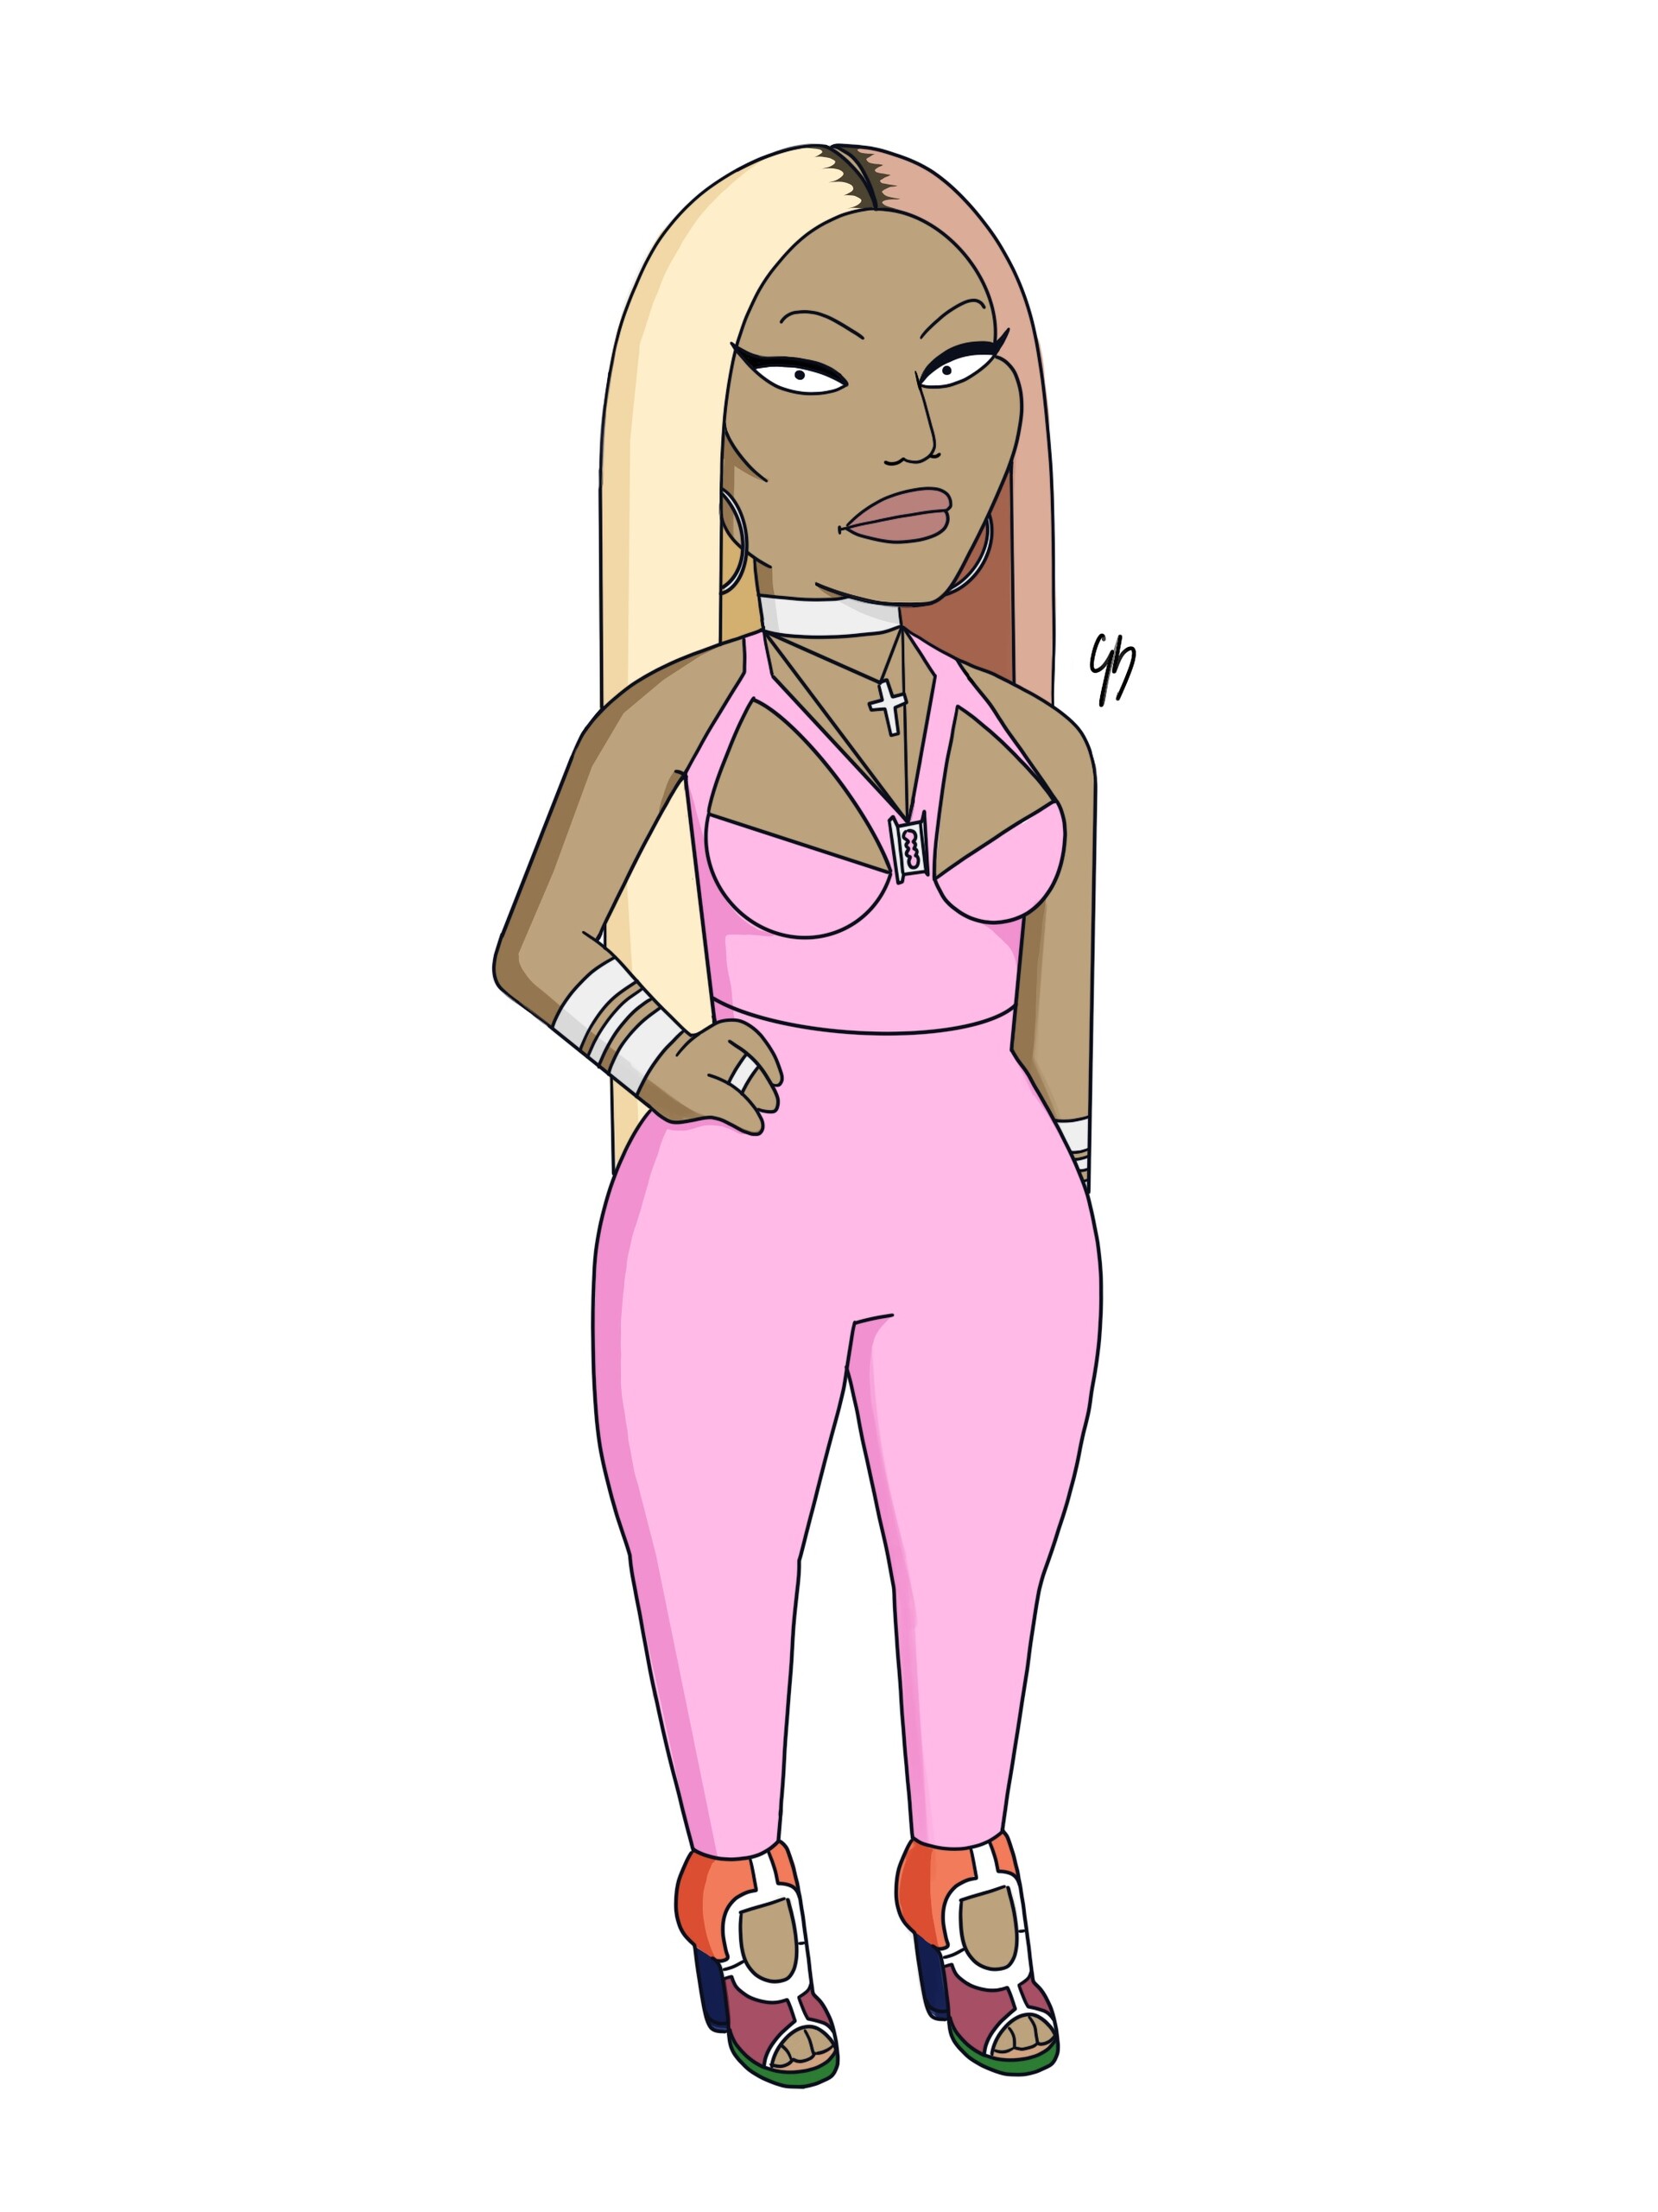 ArtStation - Nicki Minaj animated character